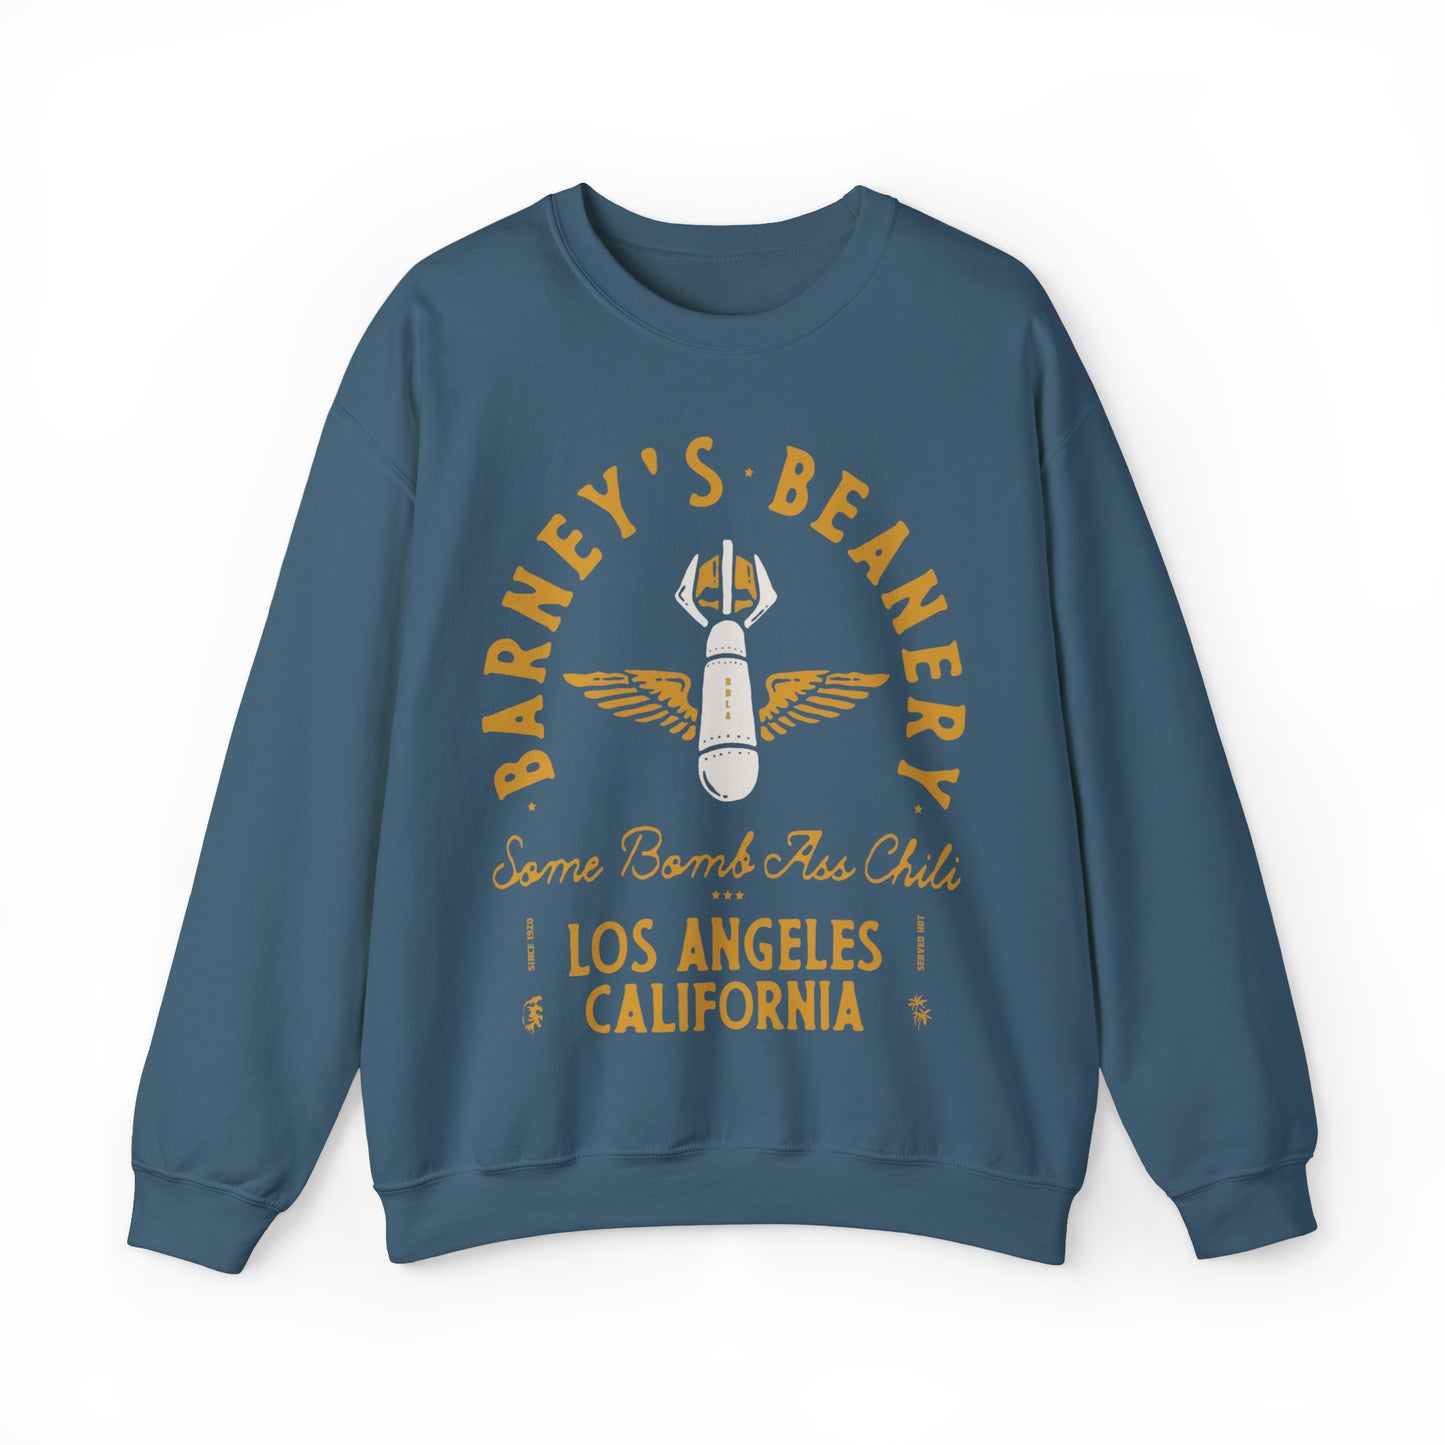 Some Bomb Ass Chili | BARNEY'S BEANERY - Men's Graphic Sweatshirt